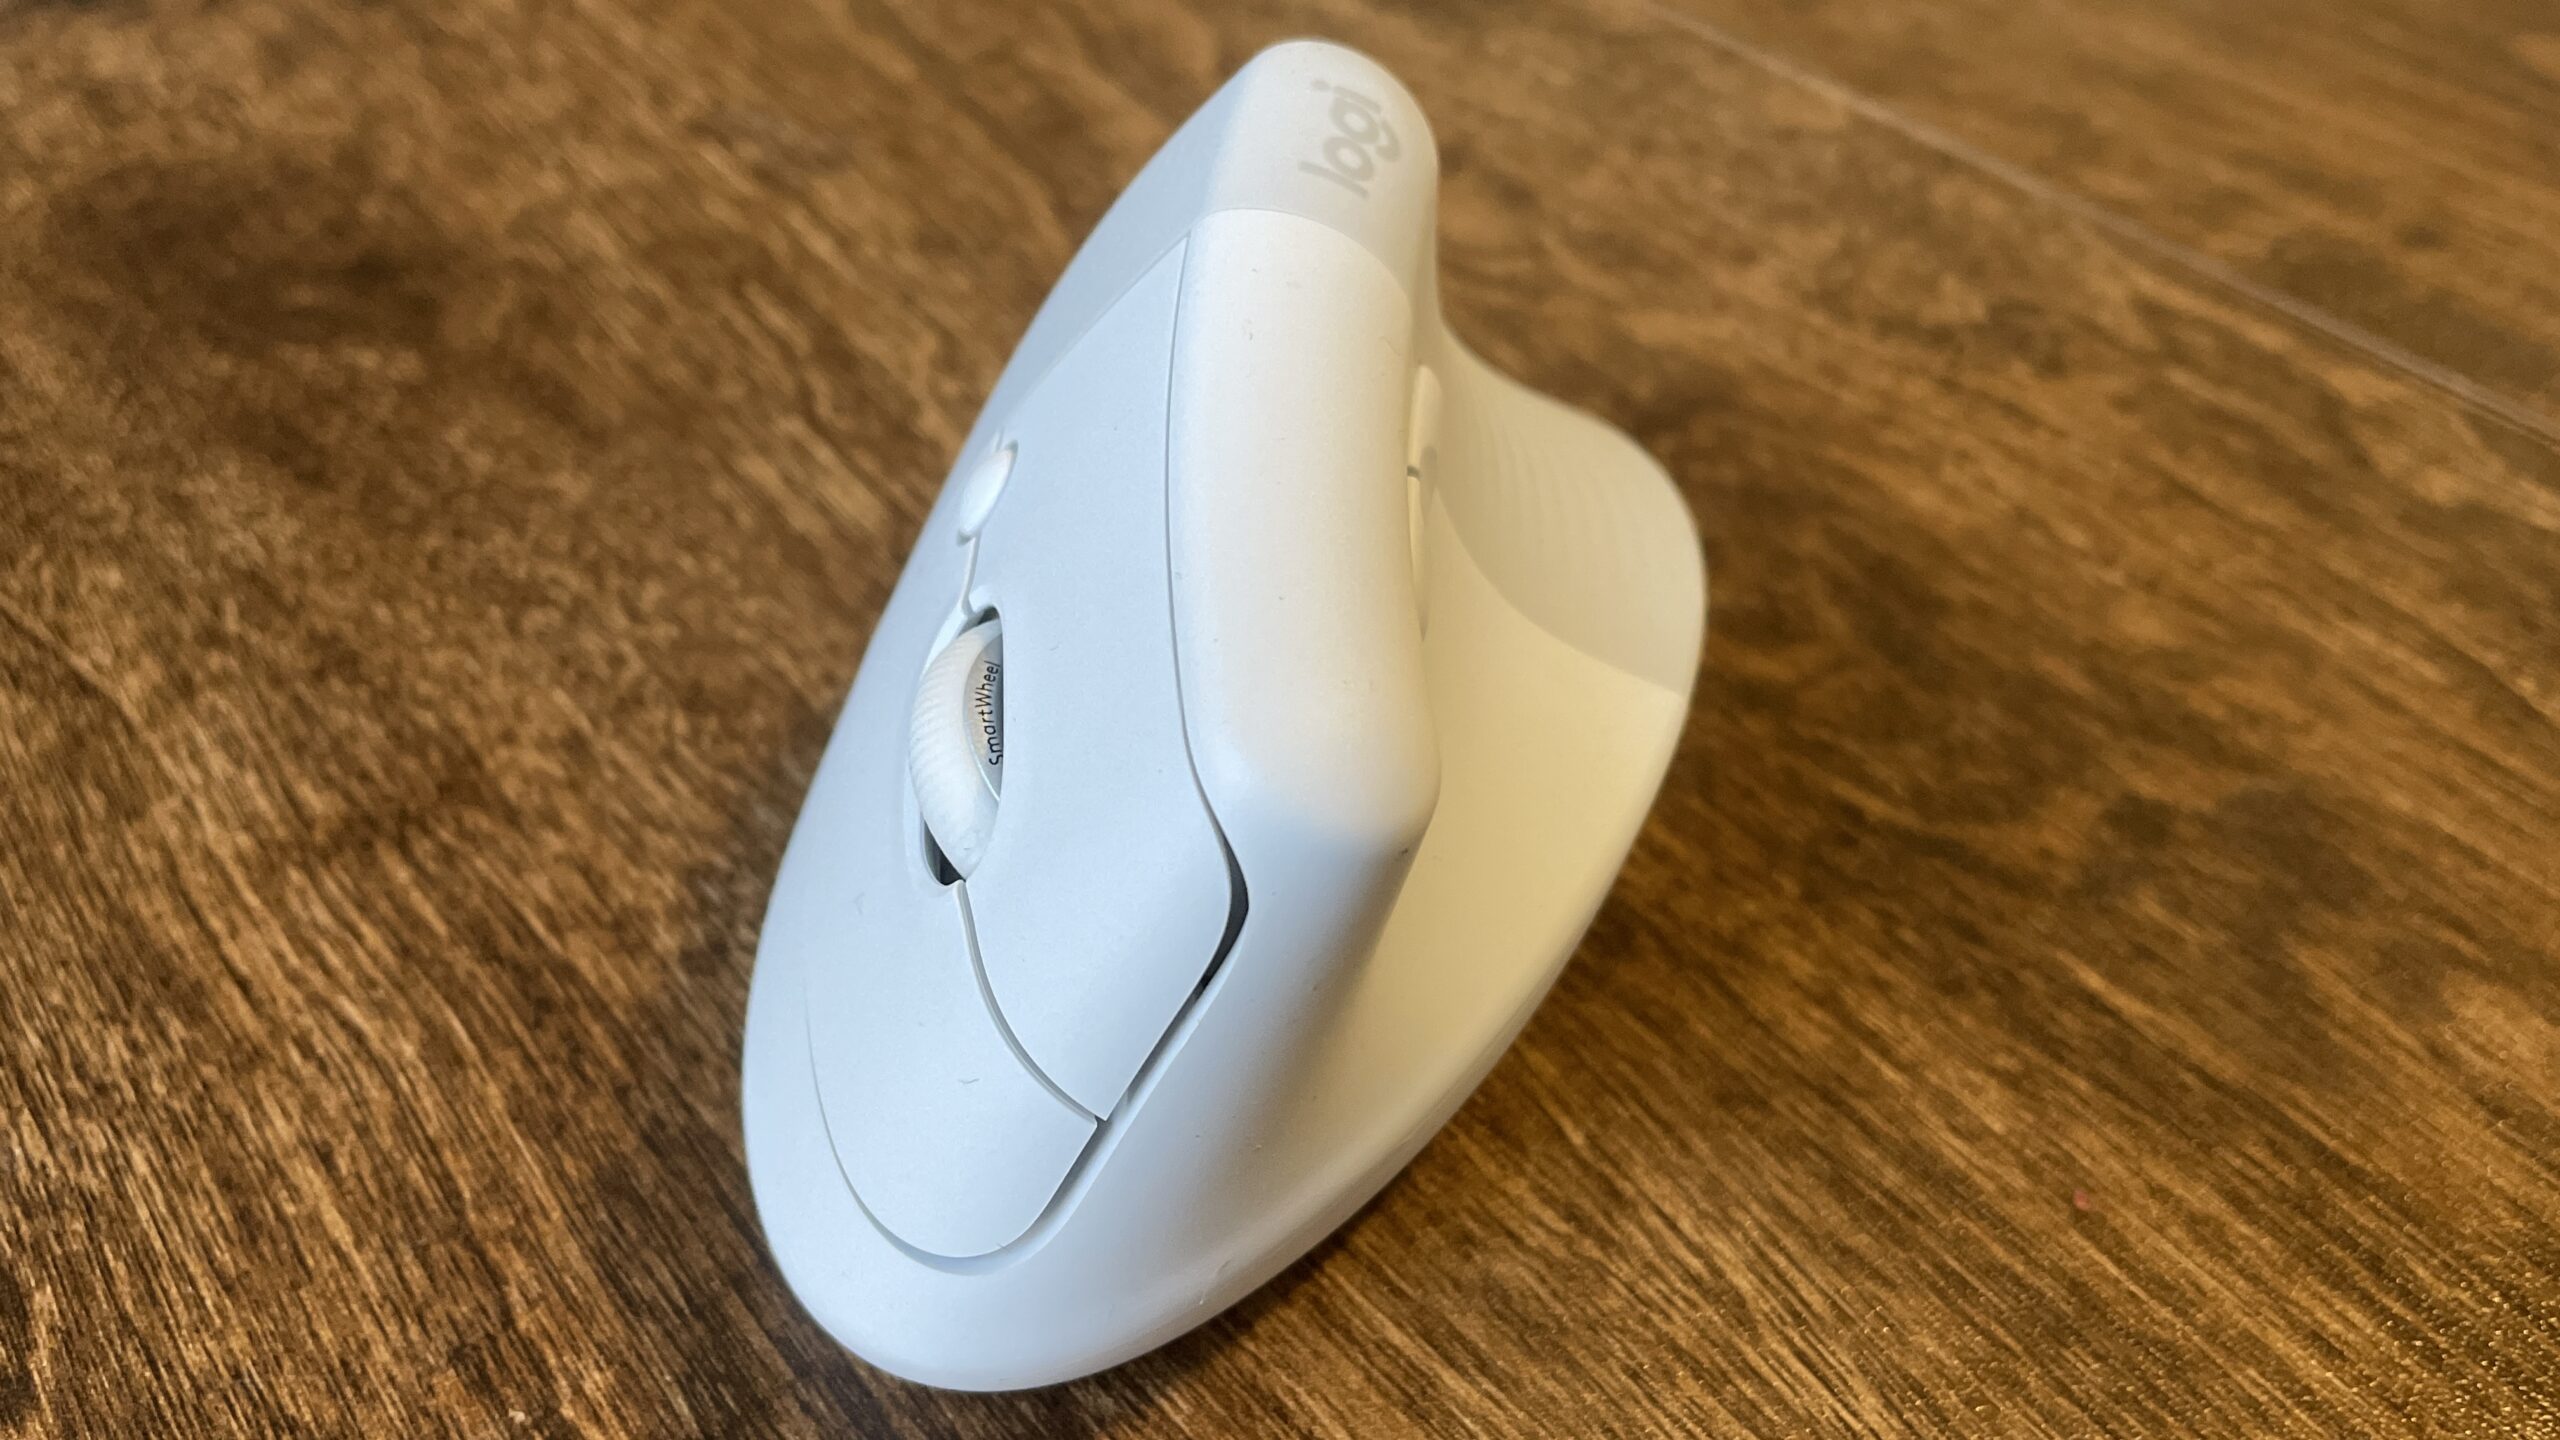 Gadget Review  Logitech Lift Ergonomic Mouse - Wonderful Sundays